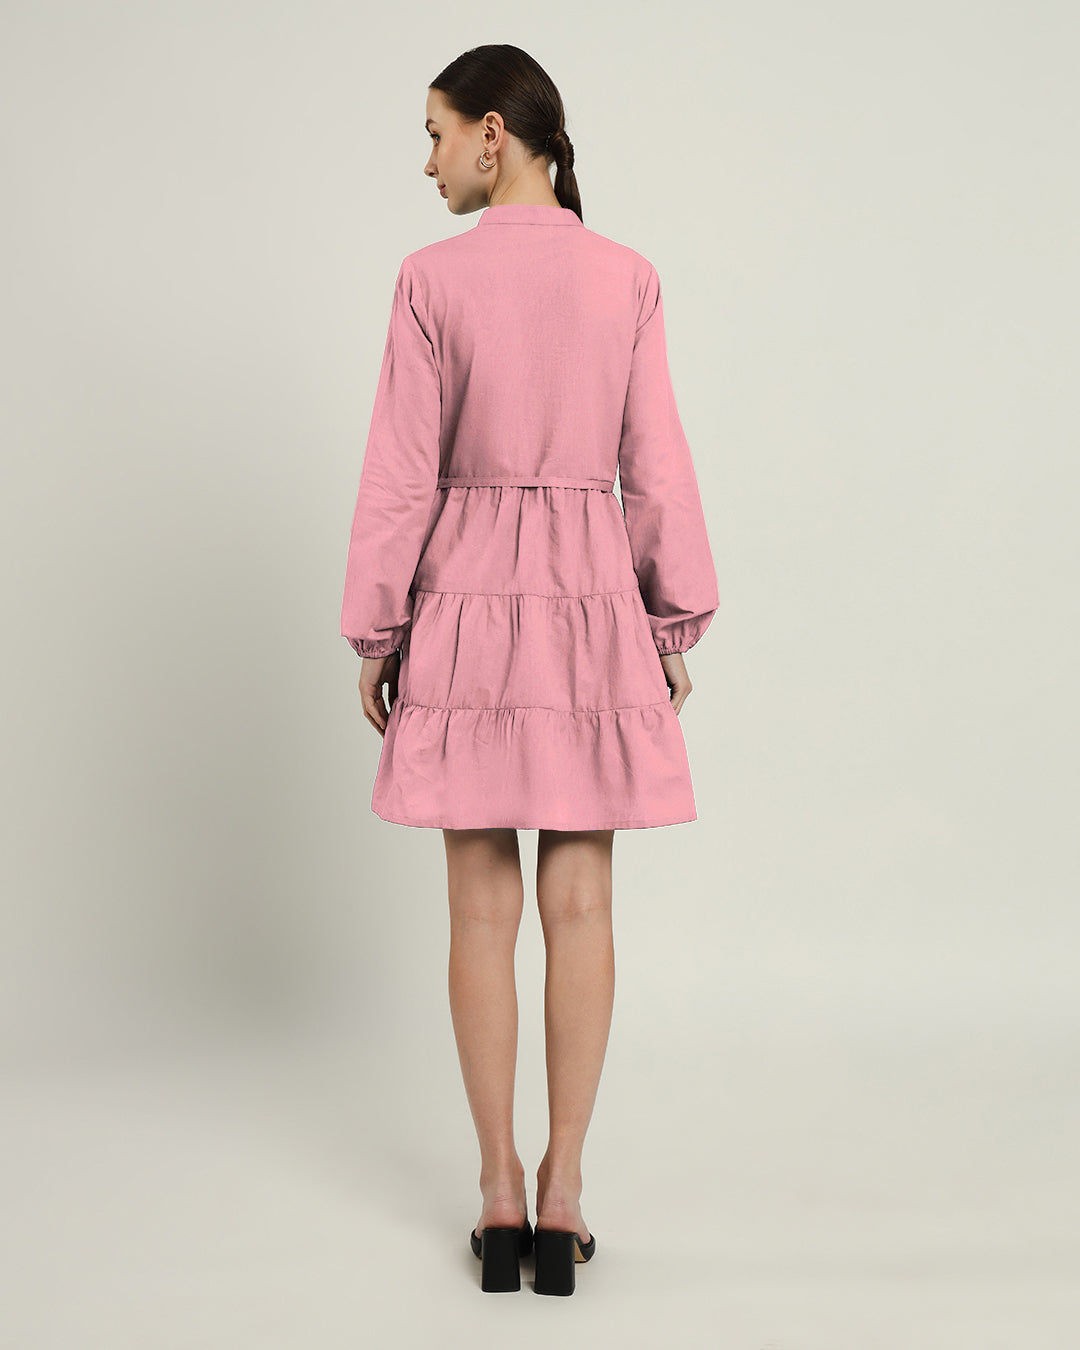 The Ely Fondant Pink Cotton Dress